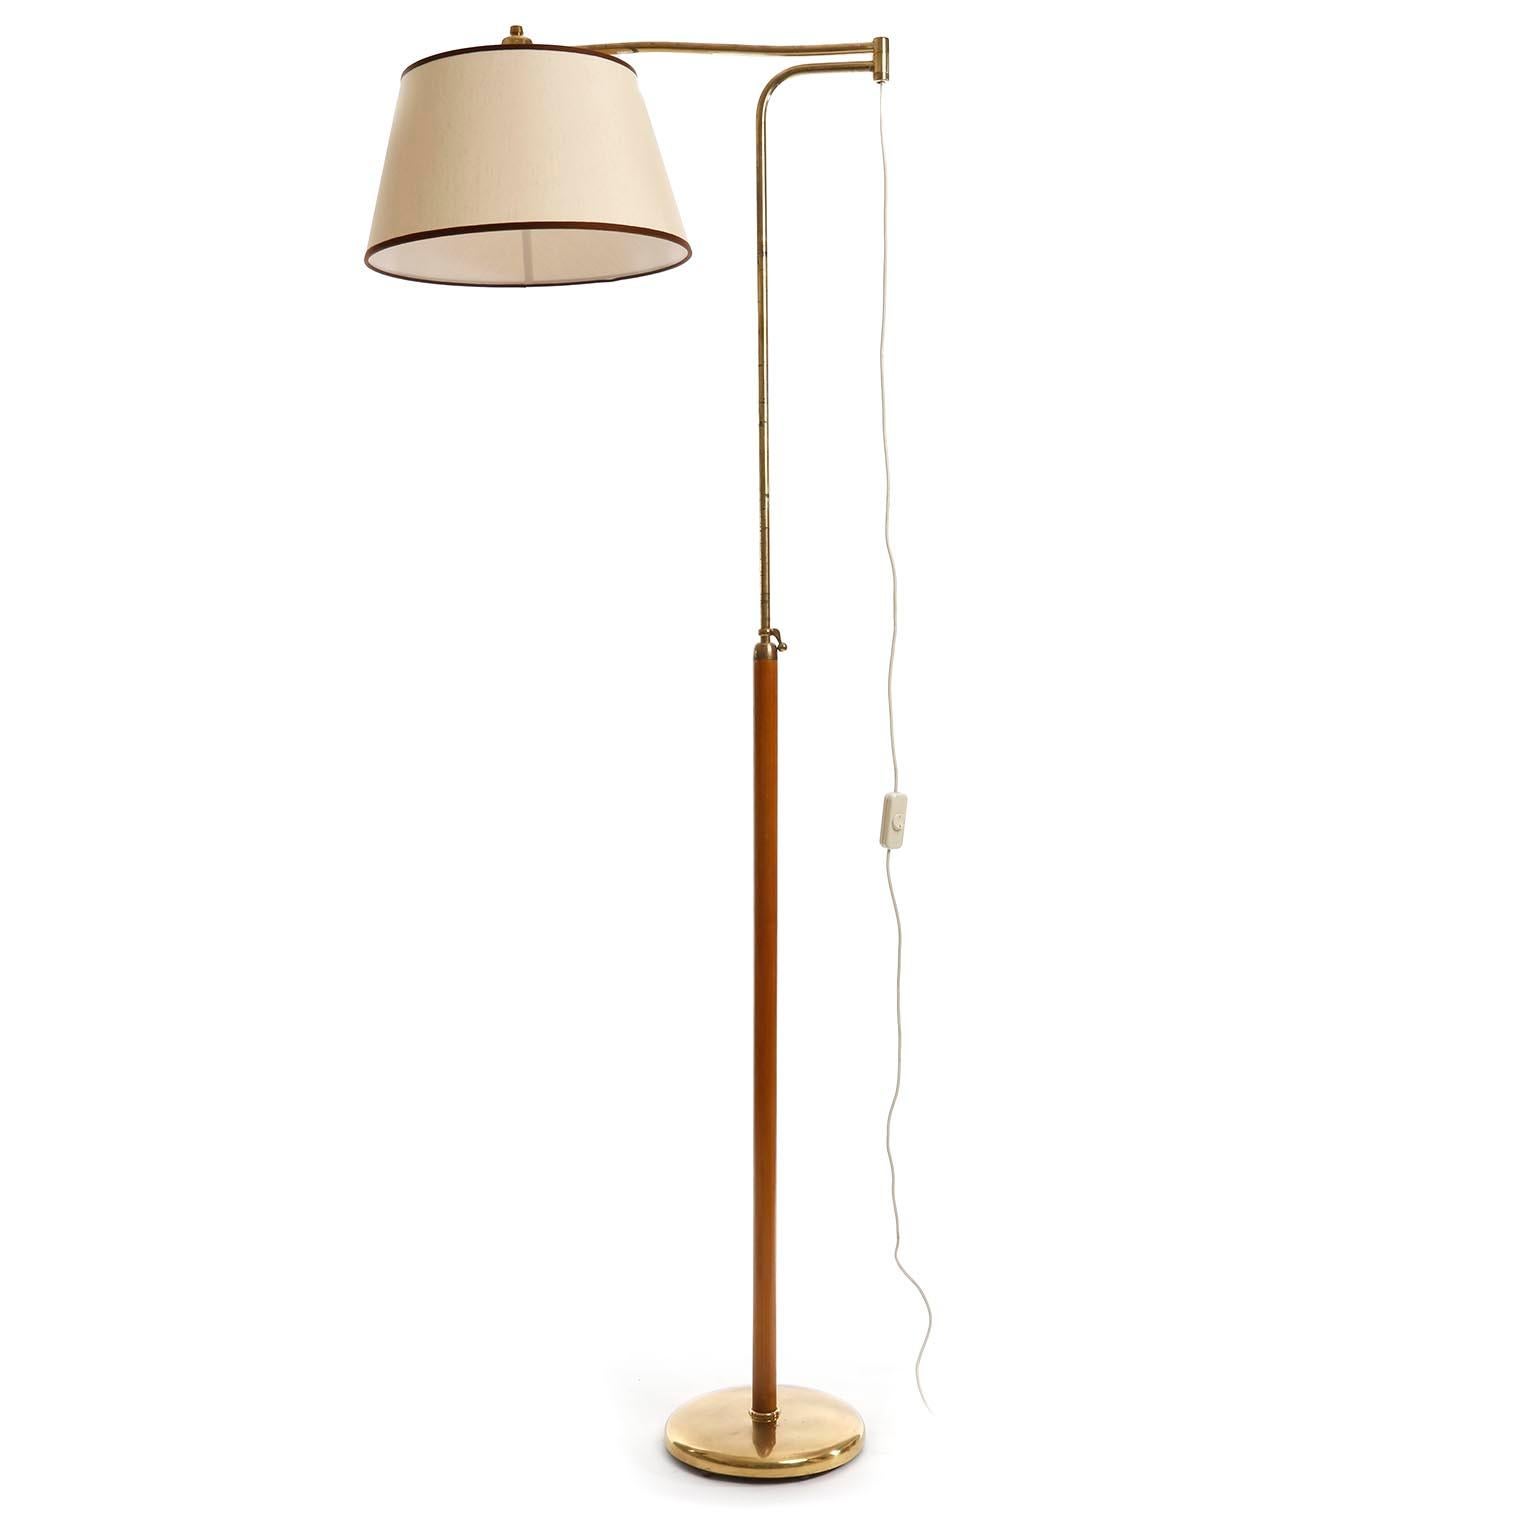 Mid-20th Century Josef Frank Adjustable Floor Lamp 'Neolift' by J.T. Kalmar, Brass Wood, 1950s For Sale